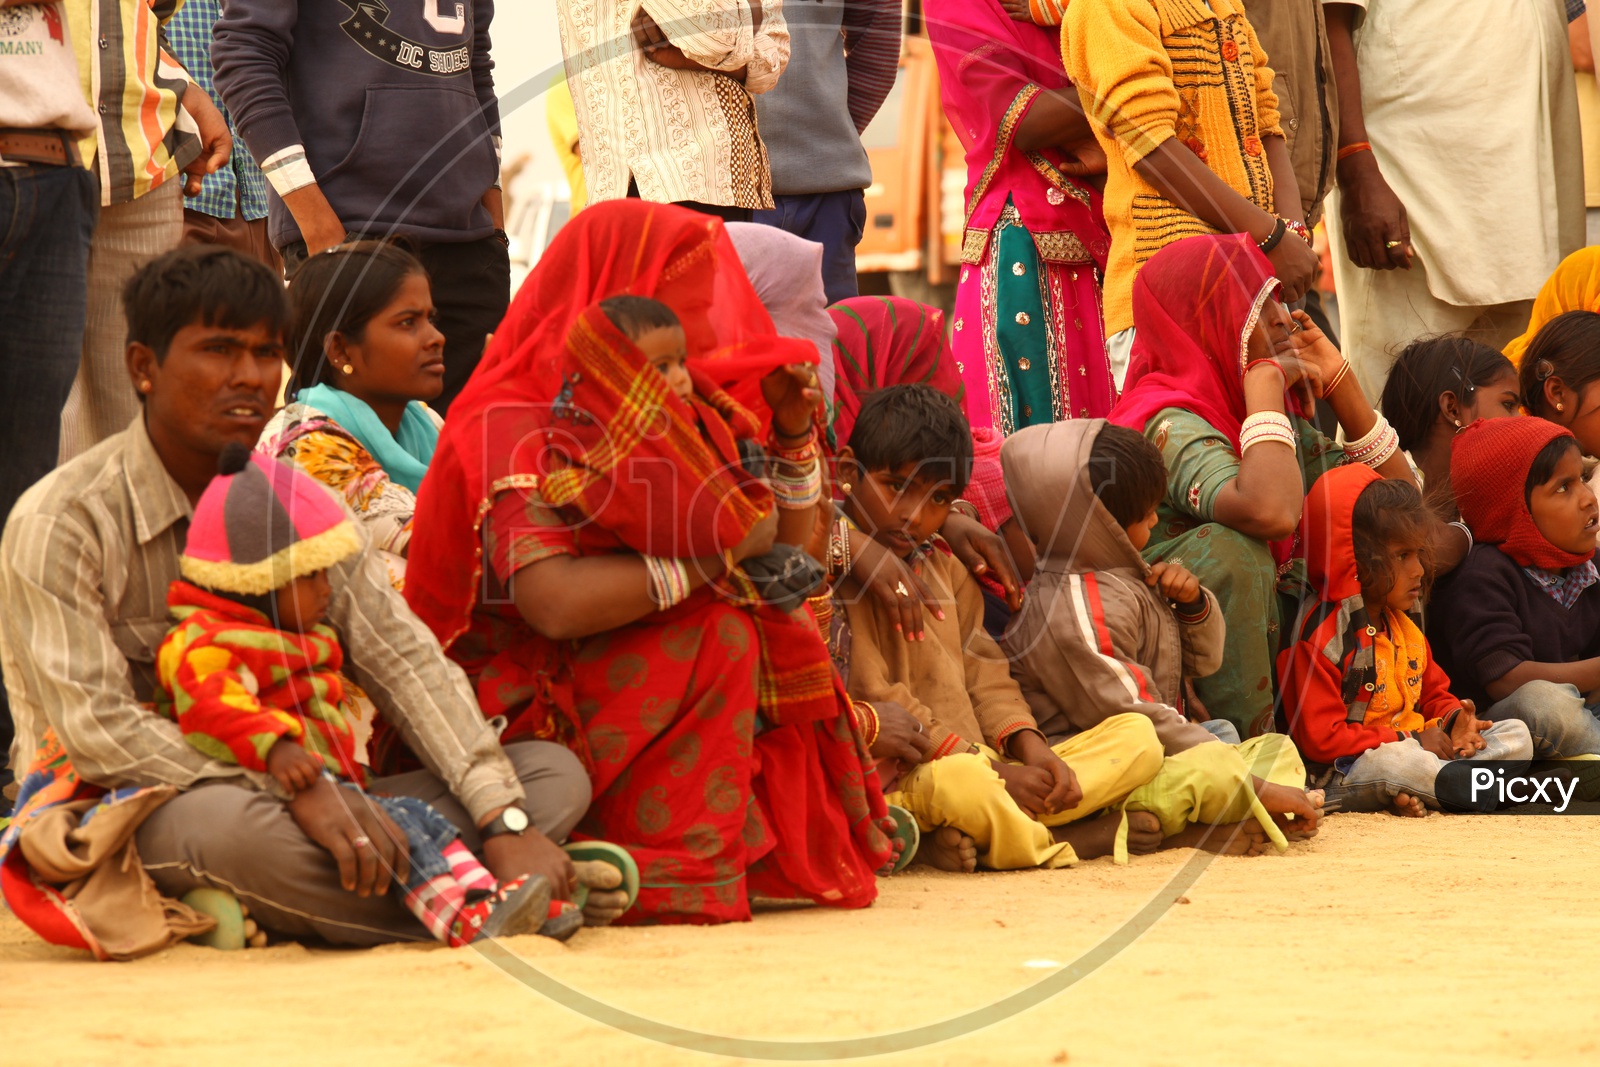 Rajasthani women and children sitting in the desert